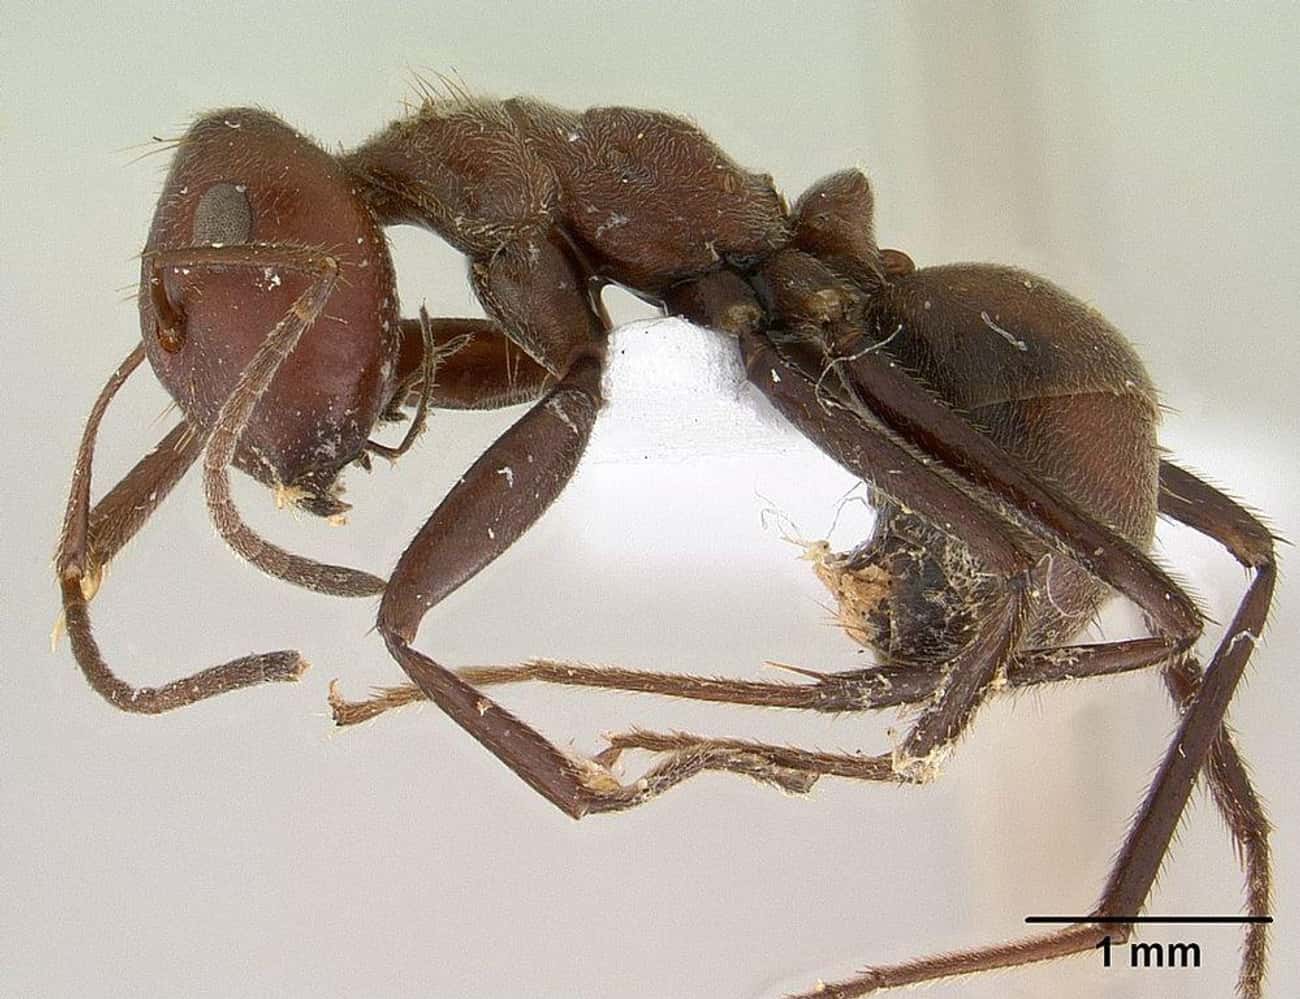 Malaysian Ants Will Explode